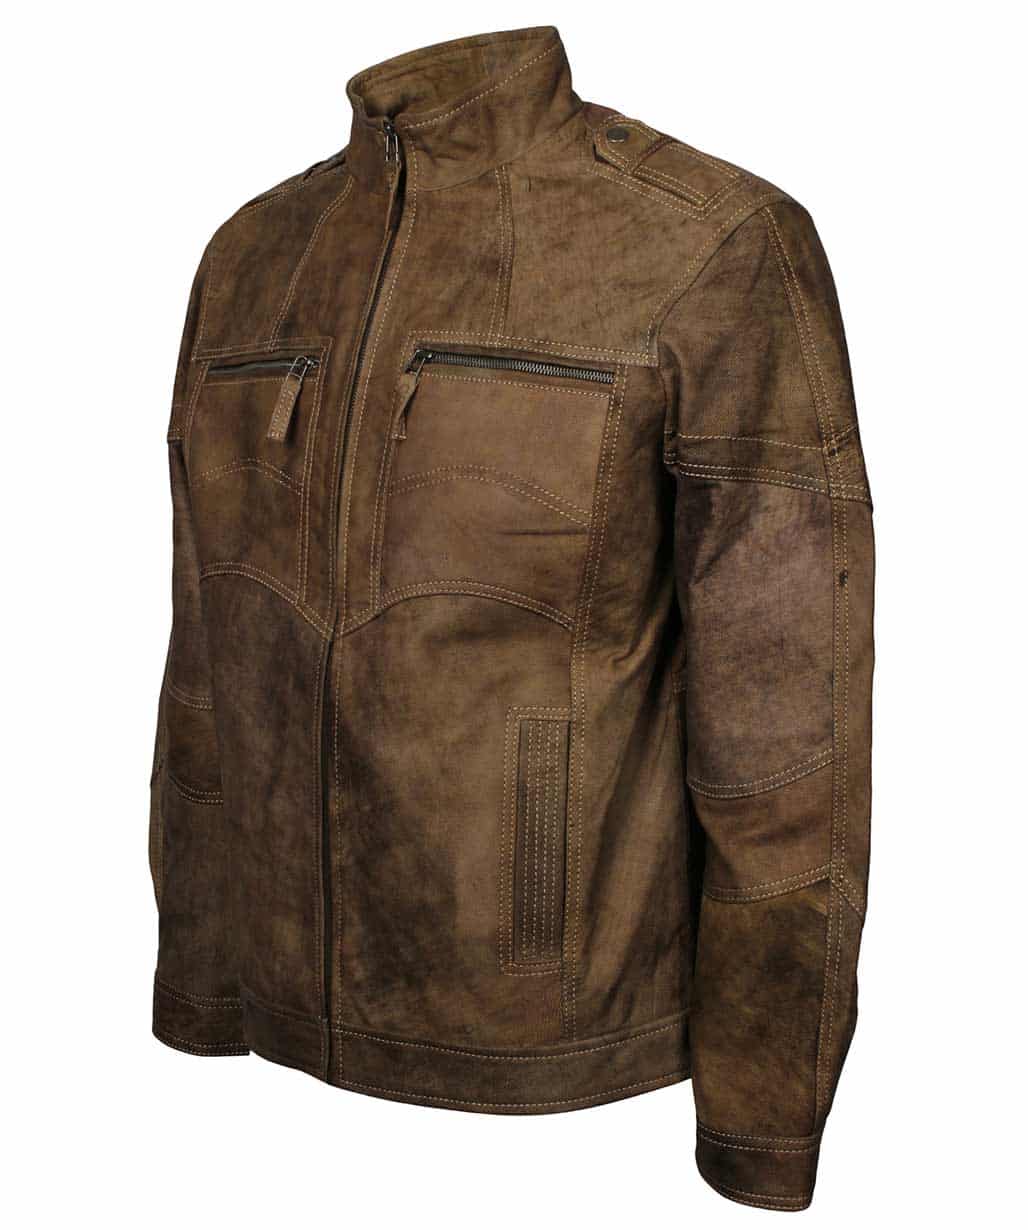 designer-men-brown-distressed-leather-jacket-outfit